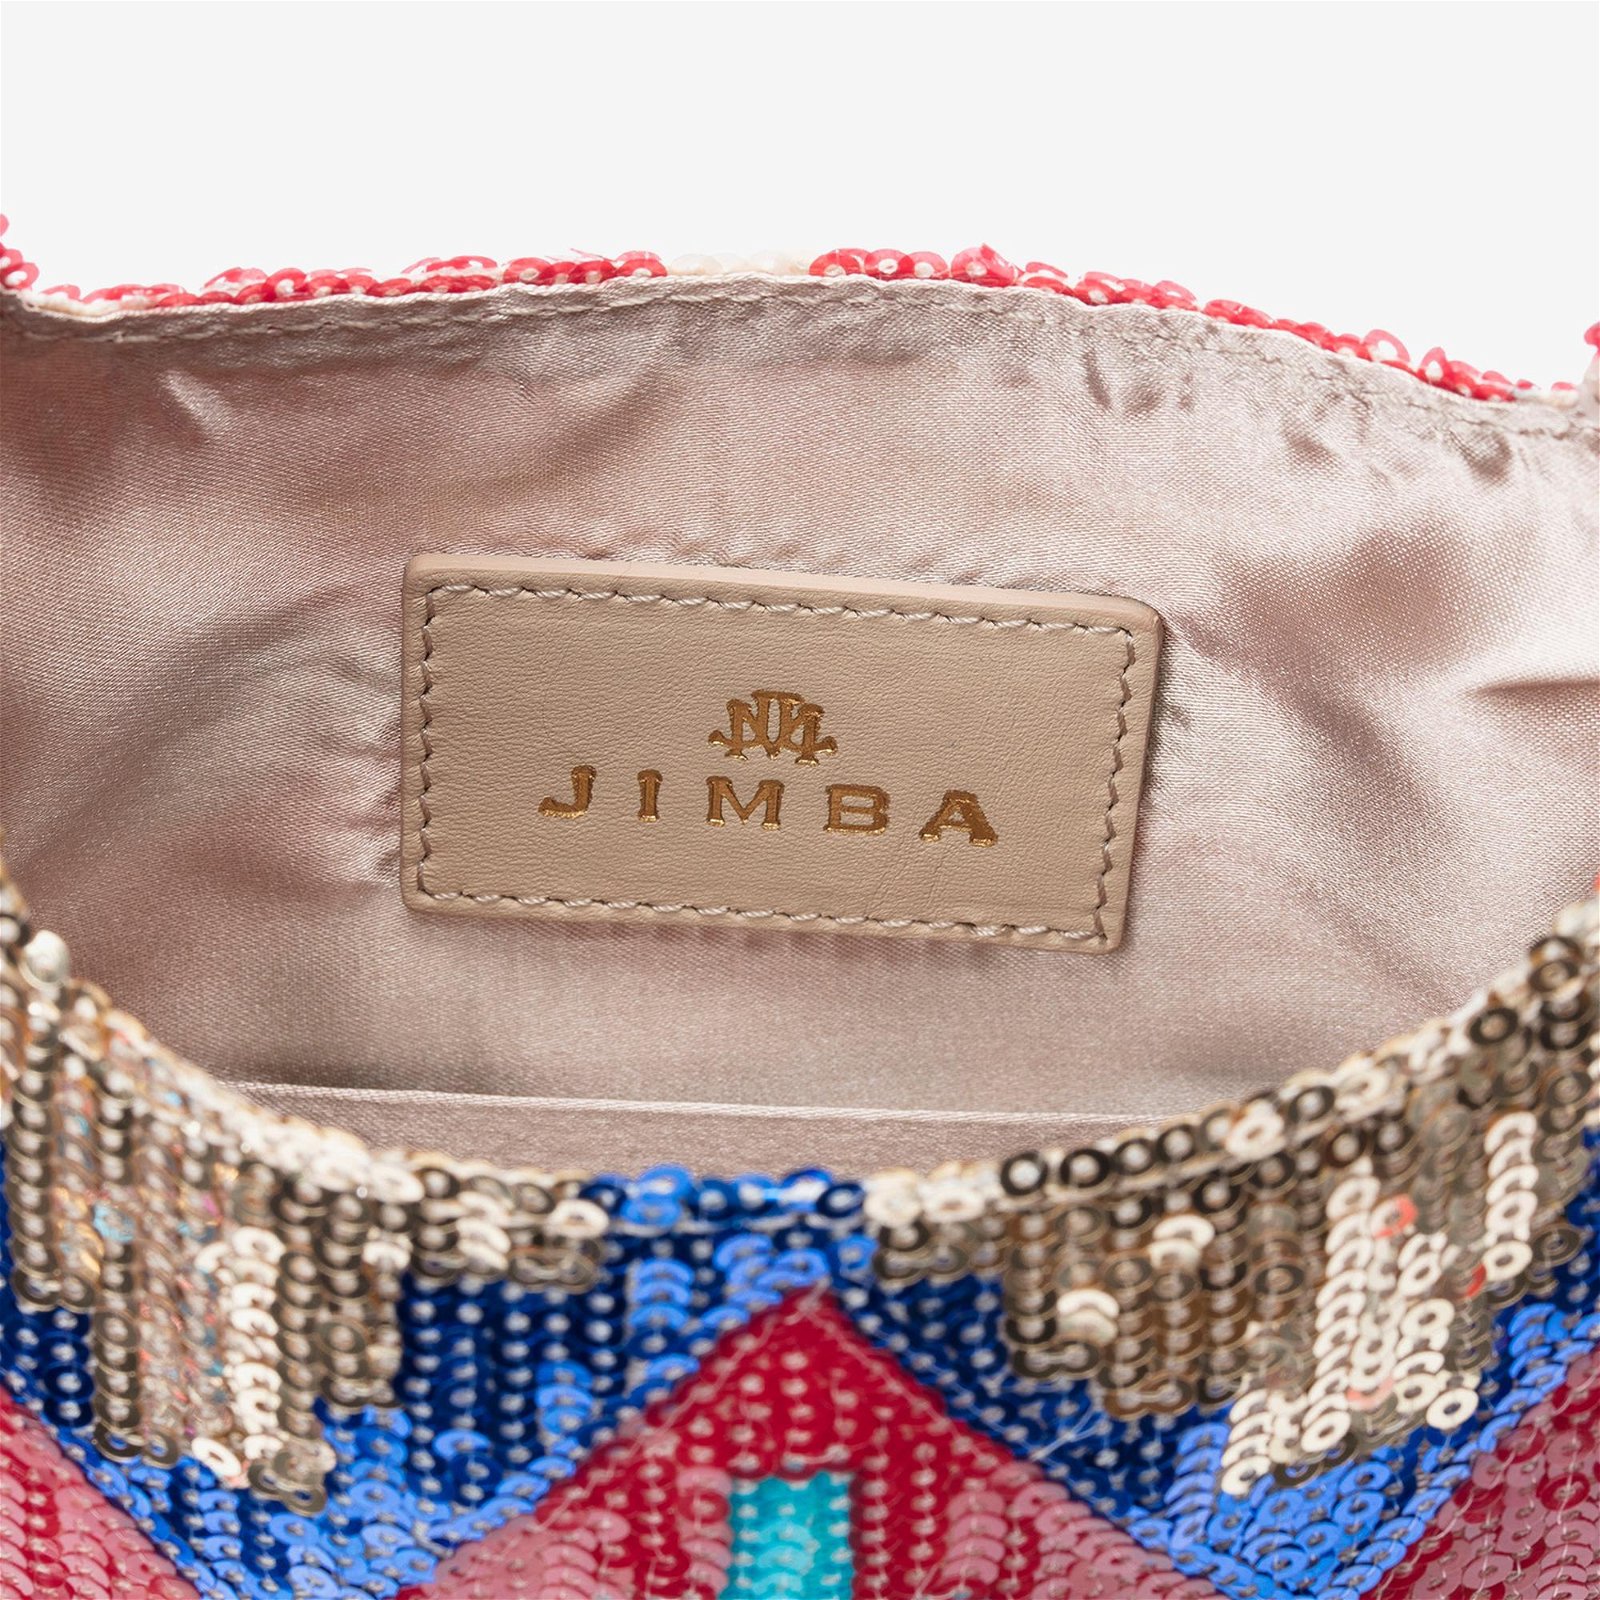 Jimba Jacob Mini Knot Kadın Renkli Omuz Çantası